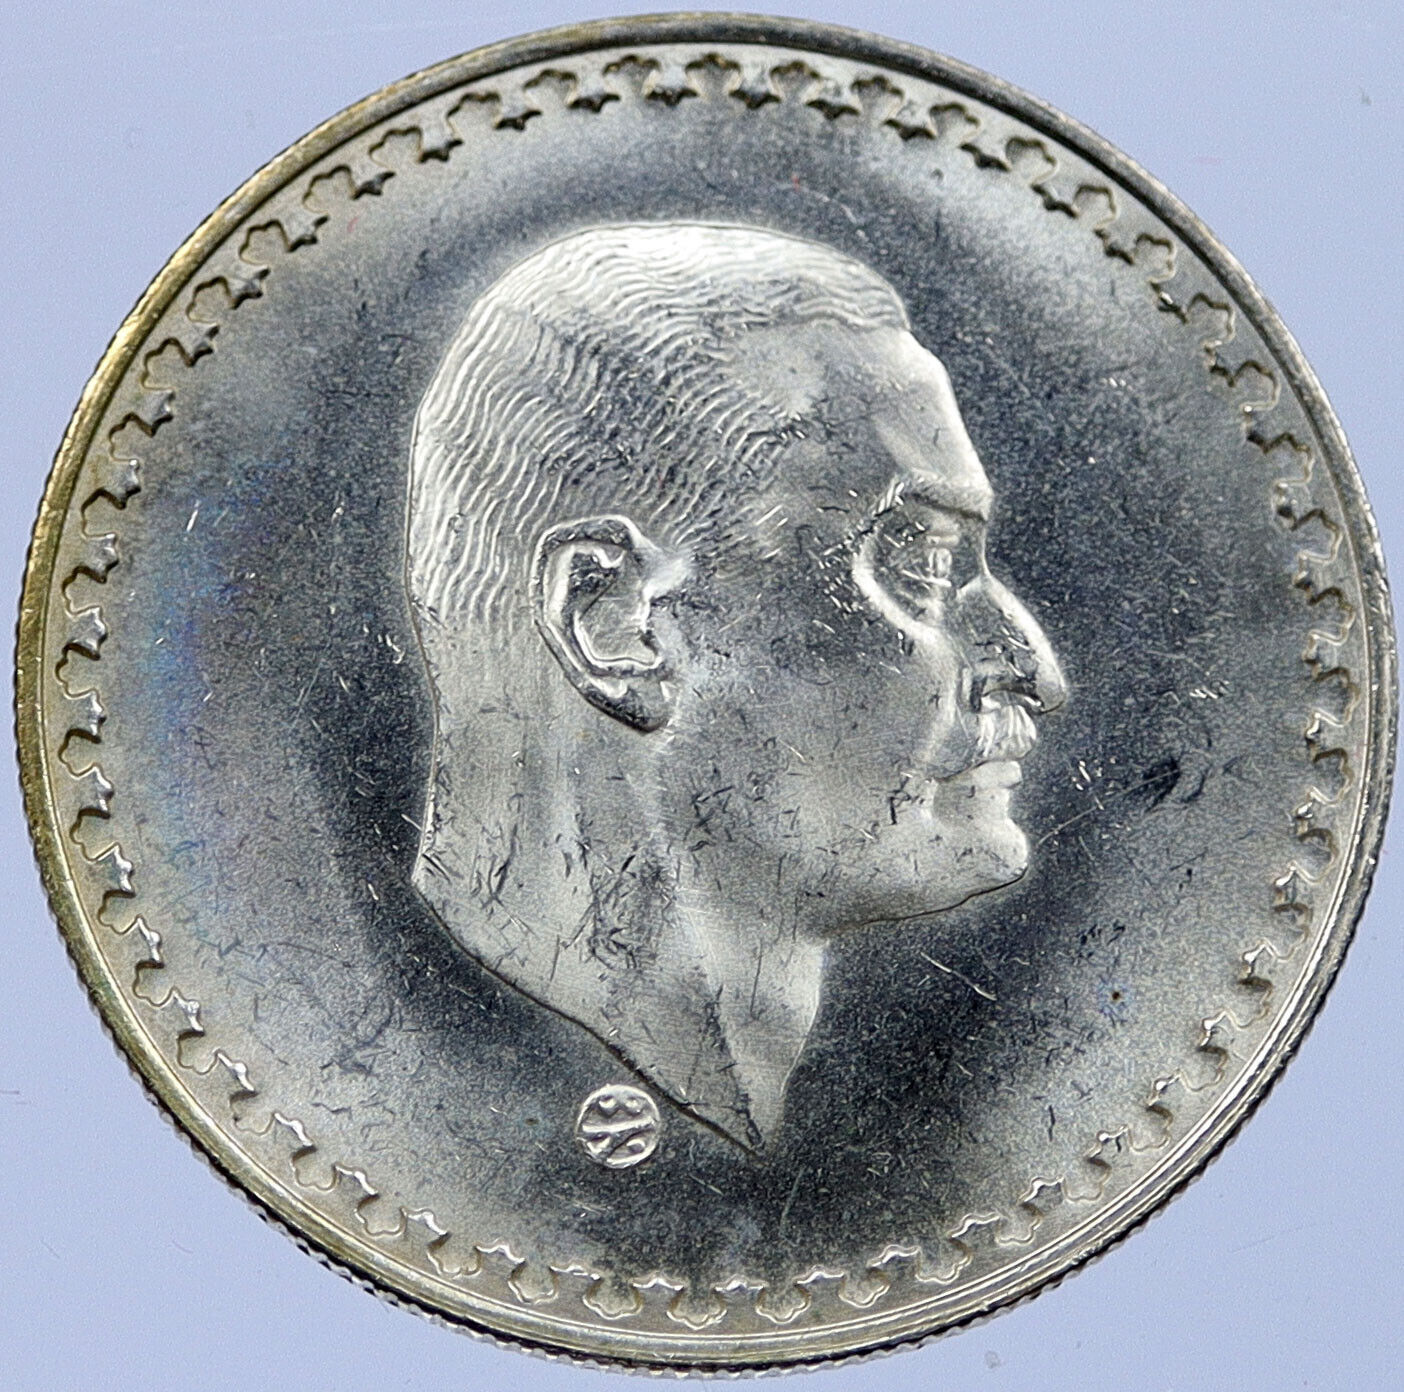 1970 EGYPT President Nasser Vintage SILVER 50 Piastres Qirsh Coin i119021